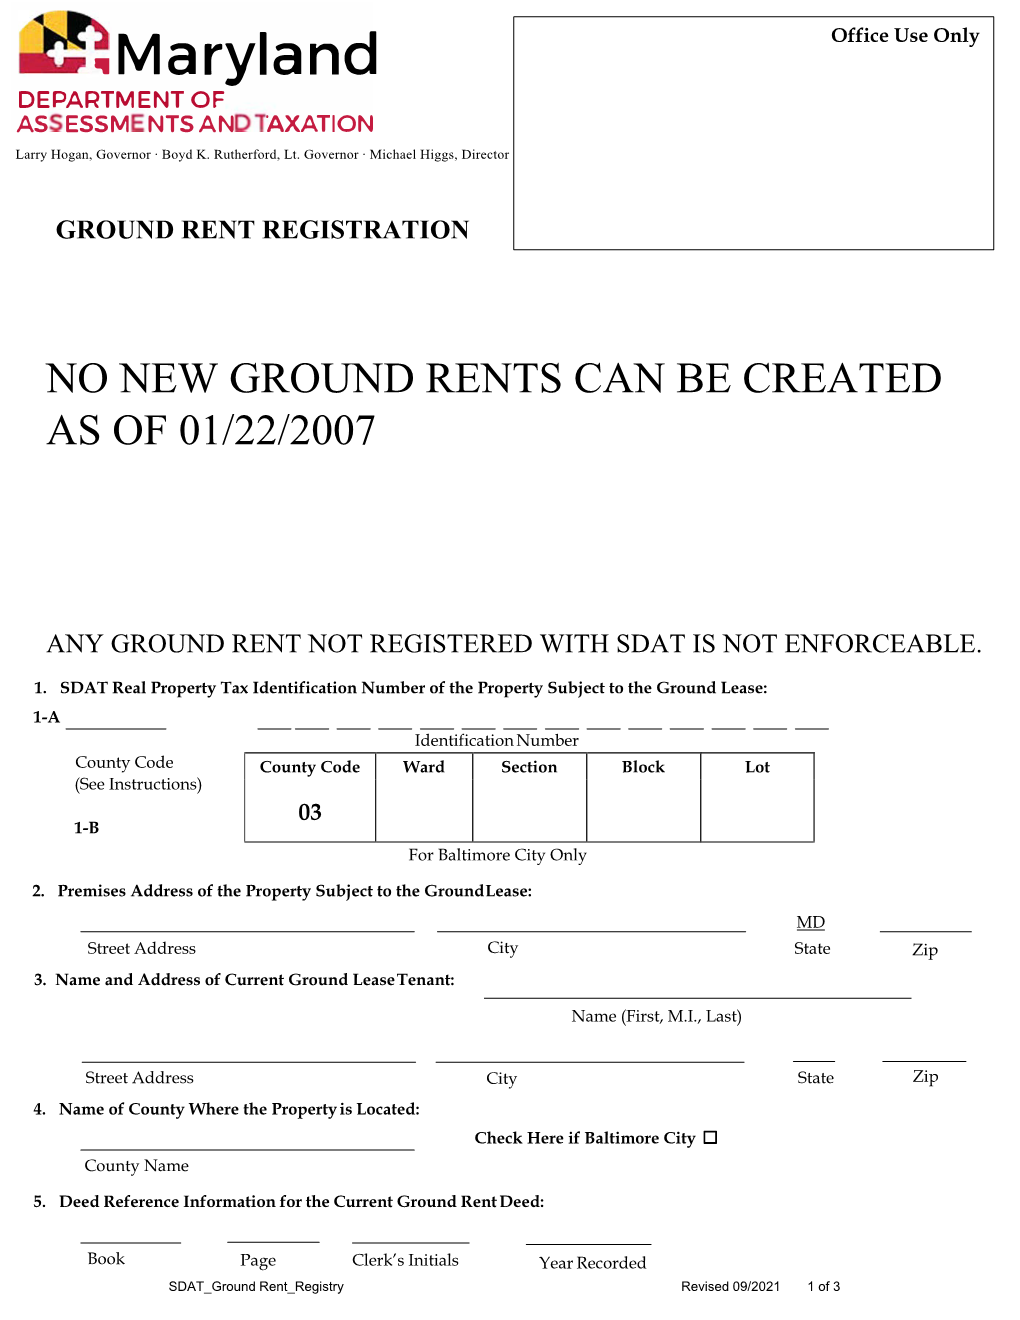 Ground Rent Registration Form